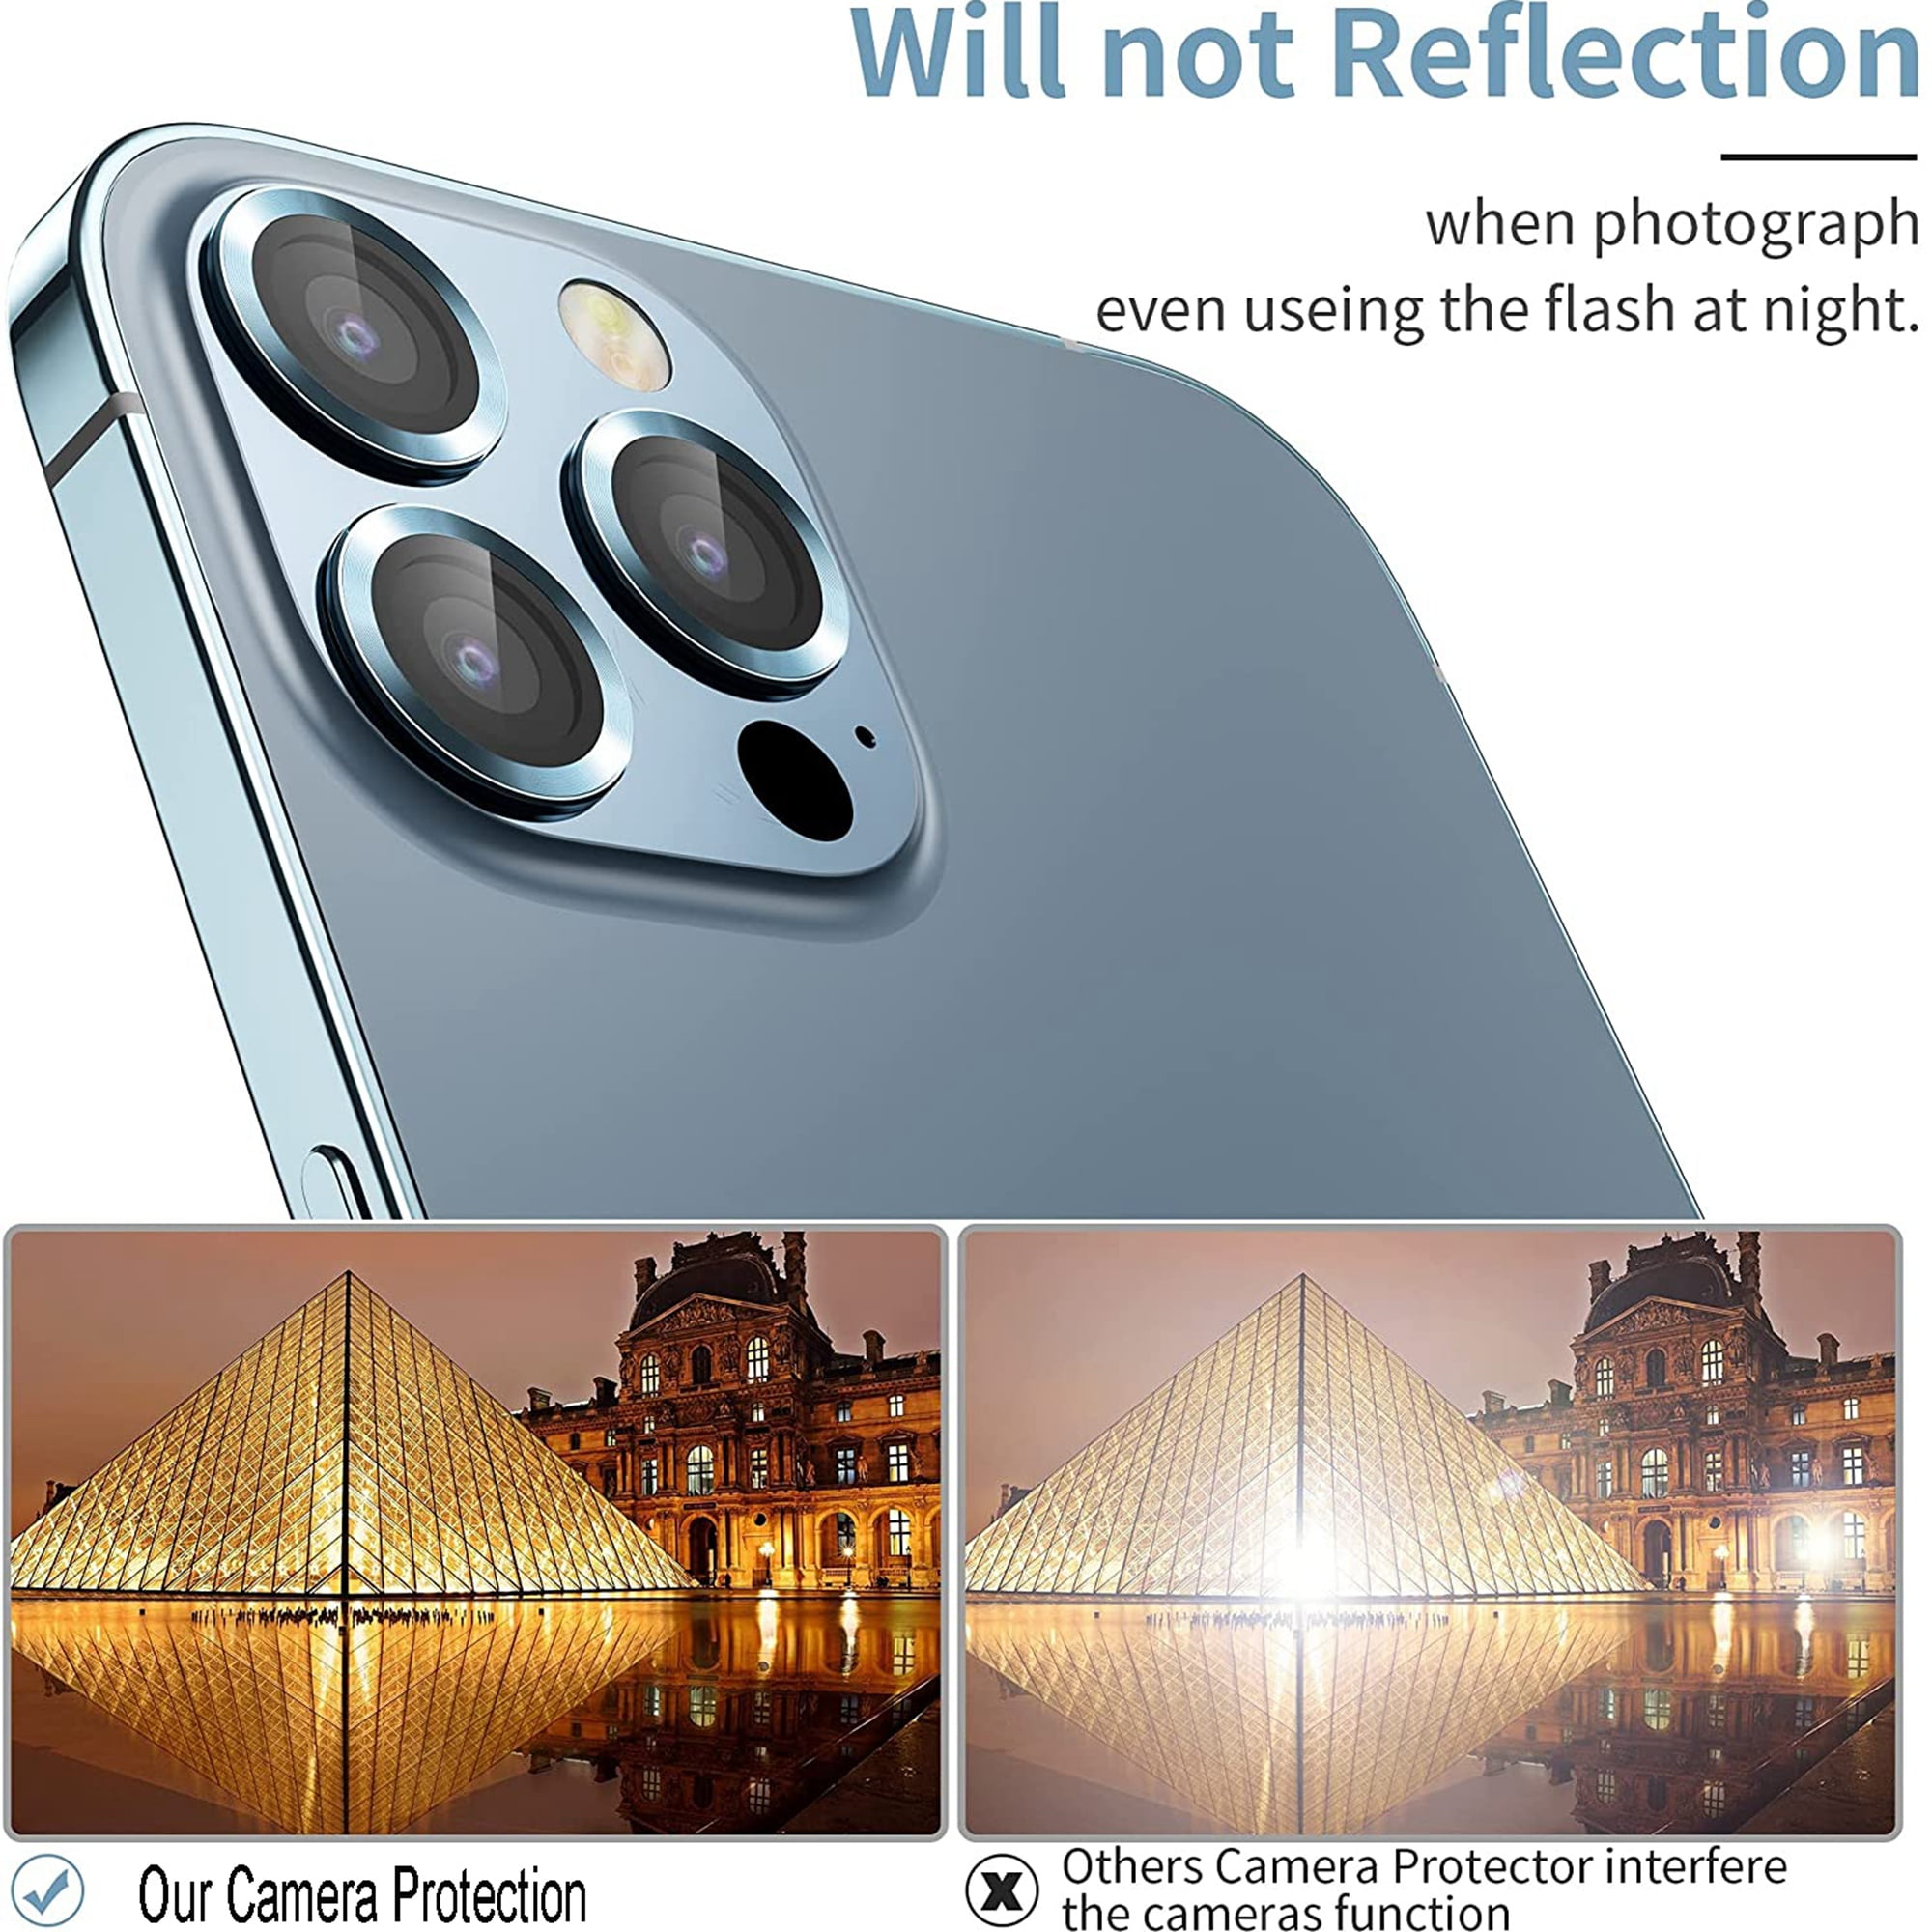 Ringke Aluminum camera lens protector for my iPhone 13 Pro. Spigen Ultra  Hybrid Mag case : r/iPhone13